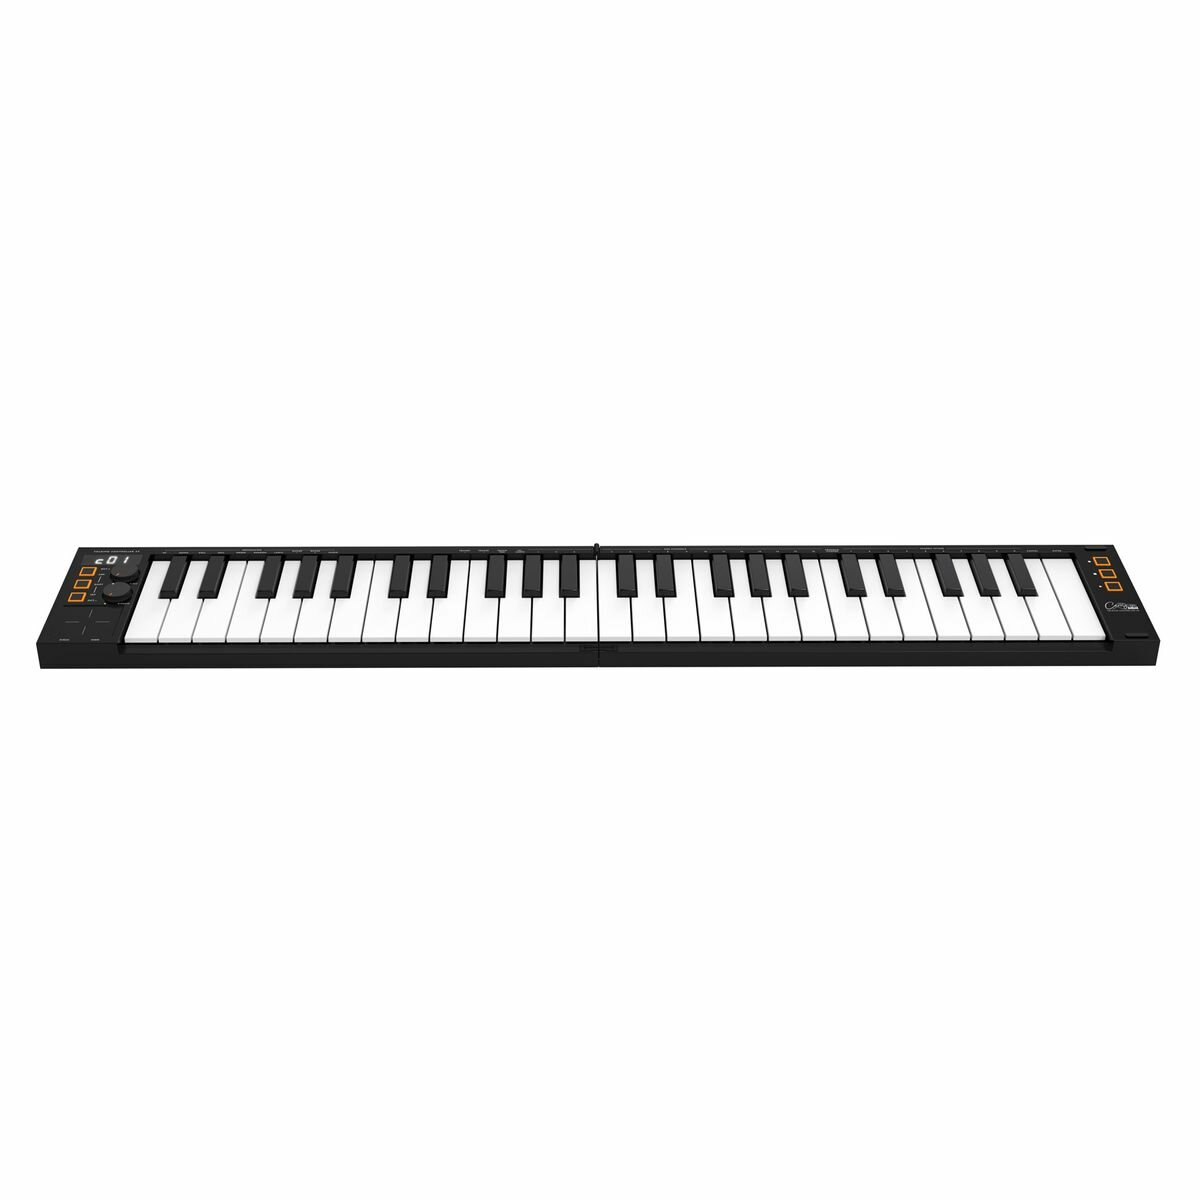 Carry-On FС-49 Портативная складная MIDI клавиатура 49 клавиш